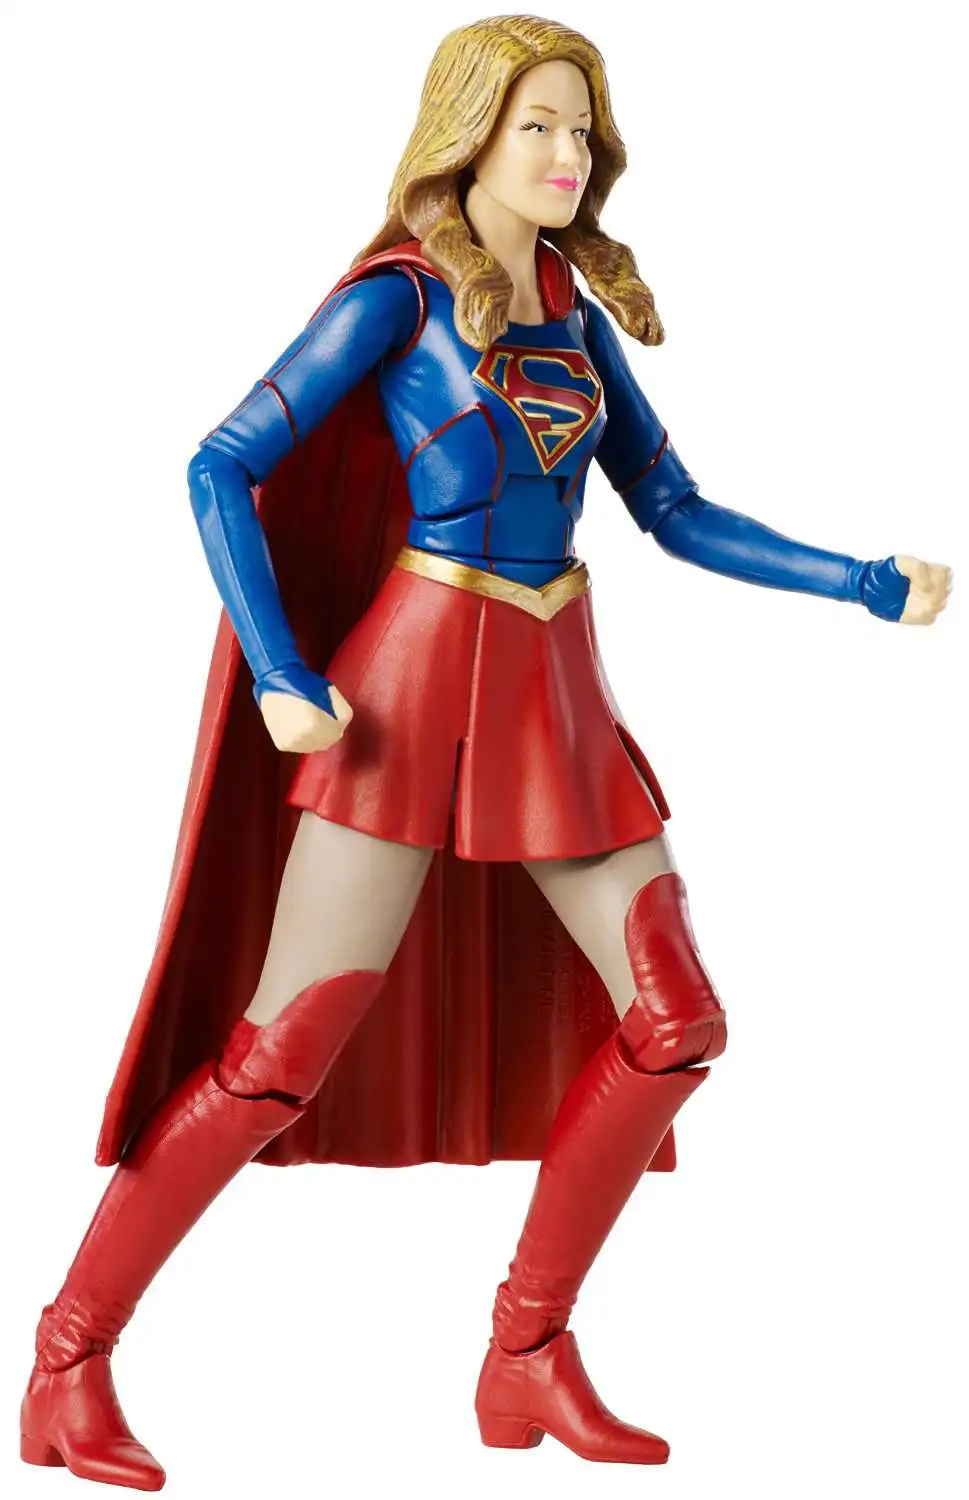 DC Comics Multiverse Supergirl Action Figure 6-Inch 